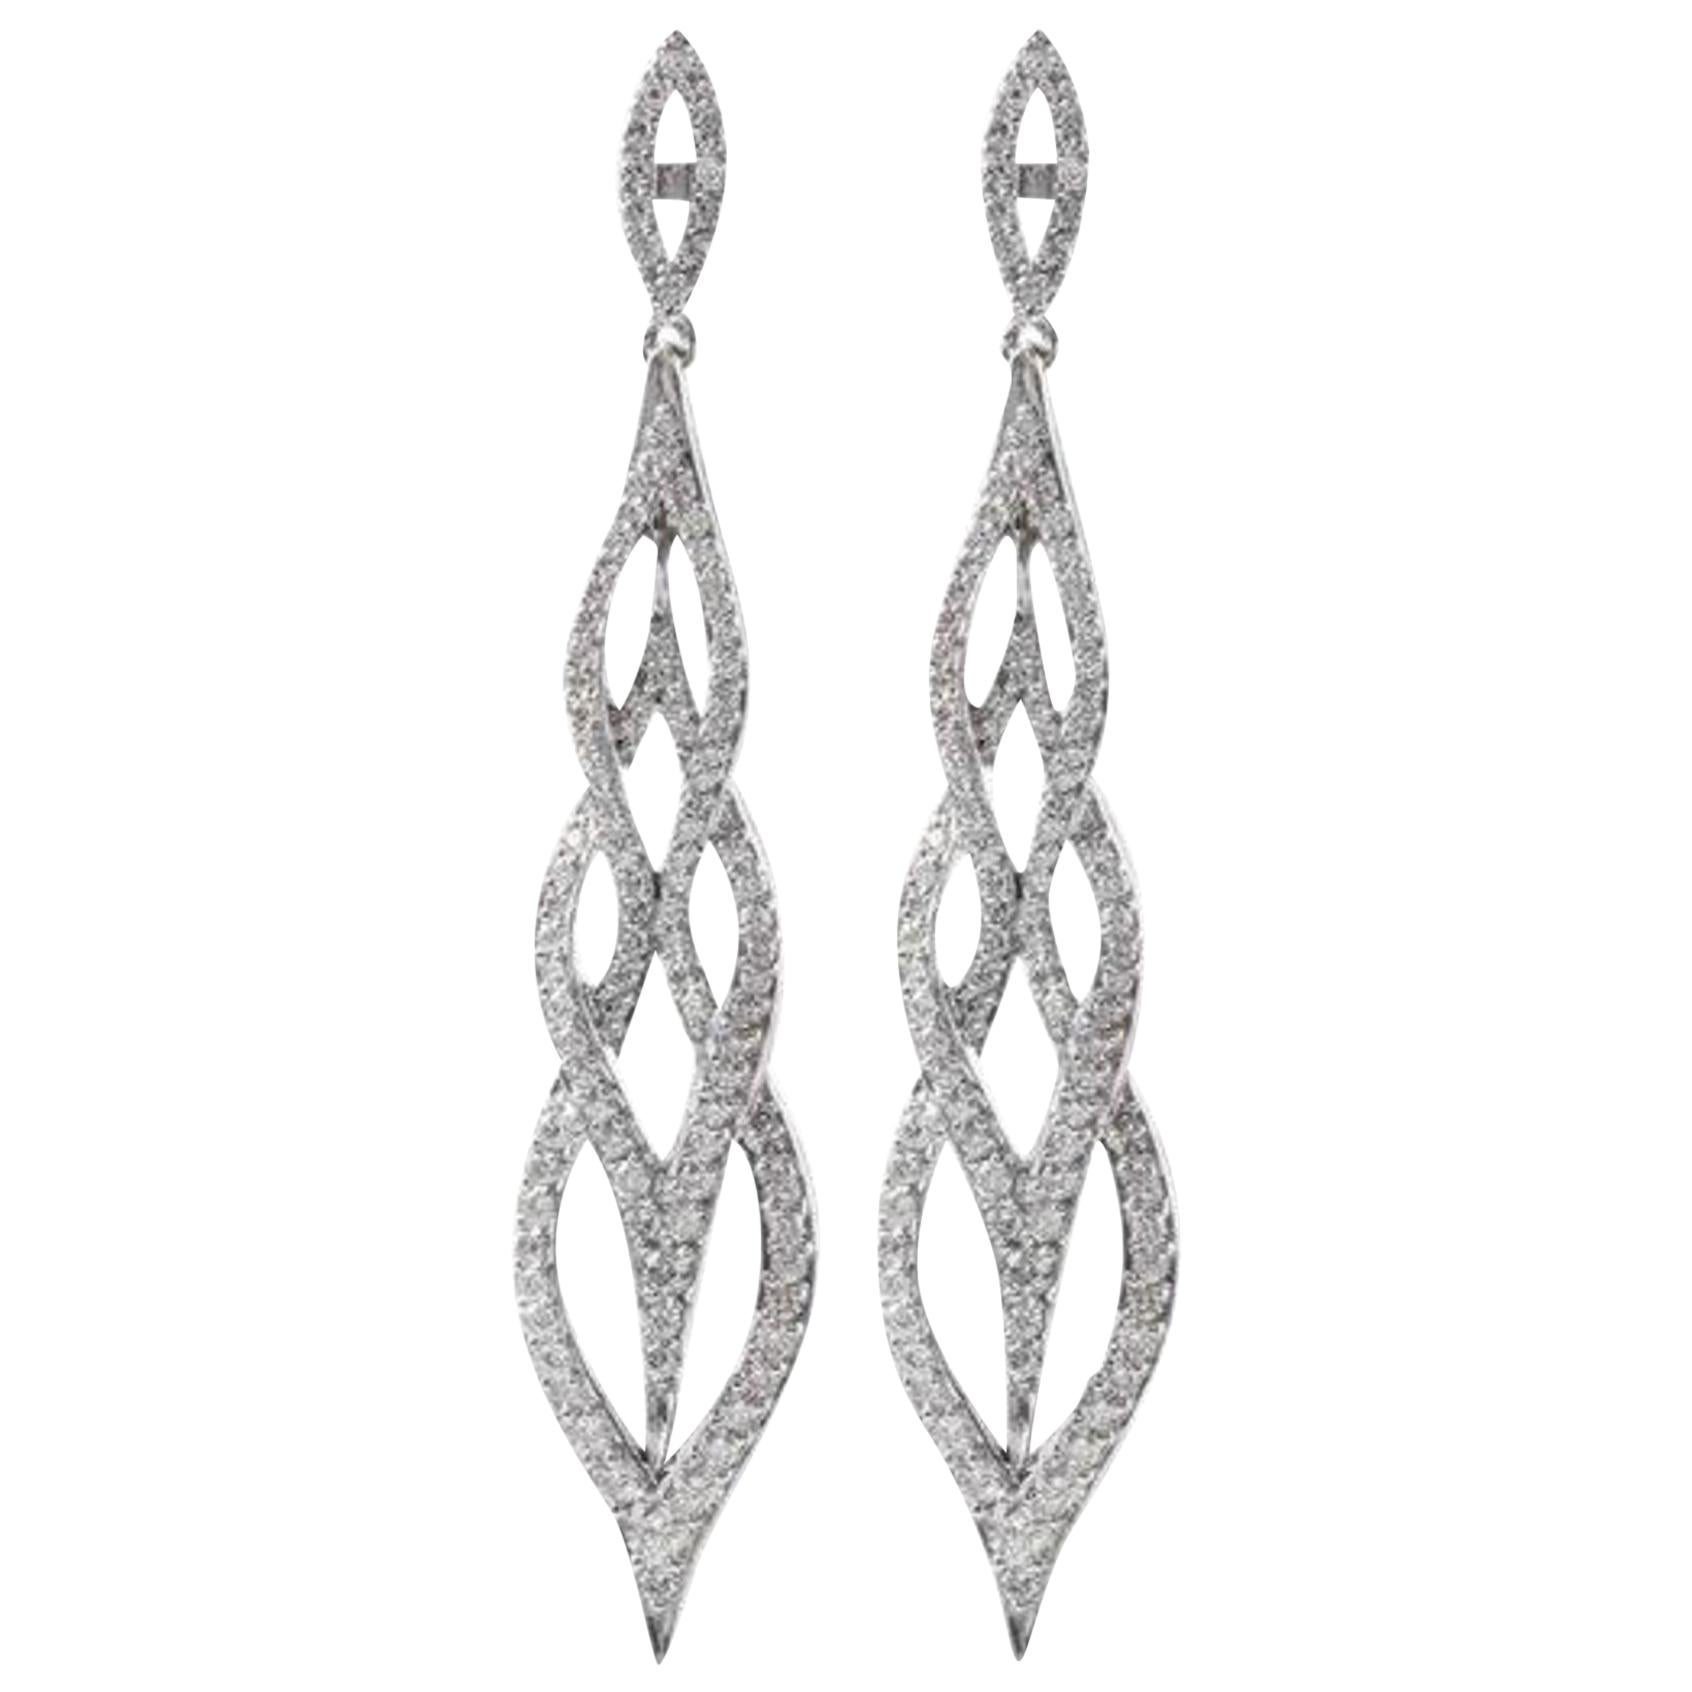 Exquisite 2.62 Carat Natural Diamond 18 Karat Solid White Gold Earrings